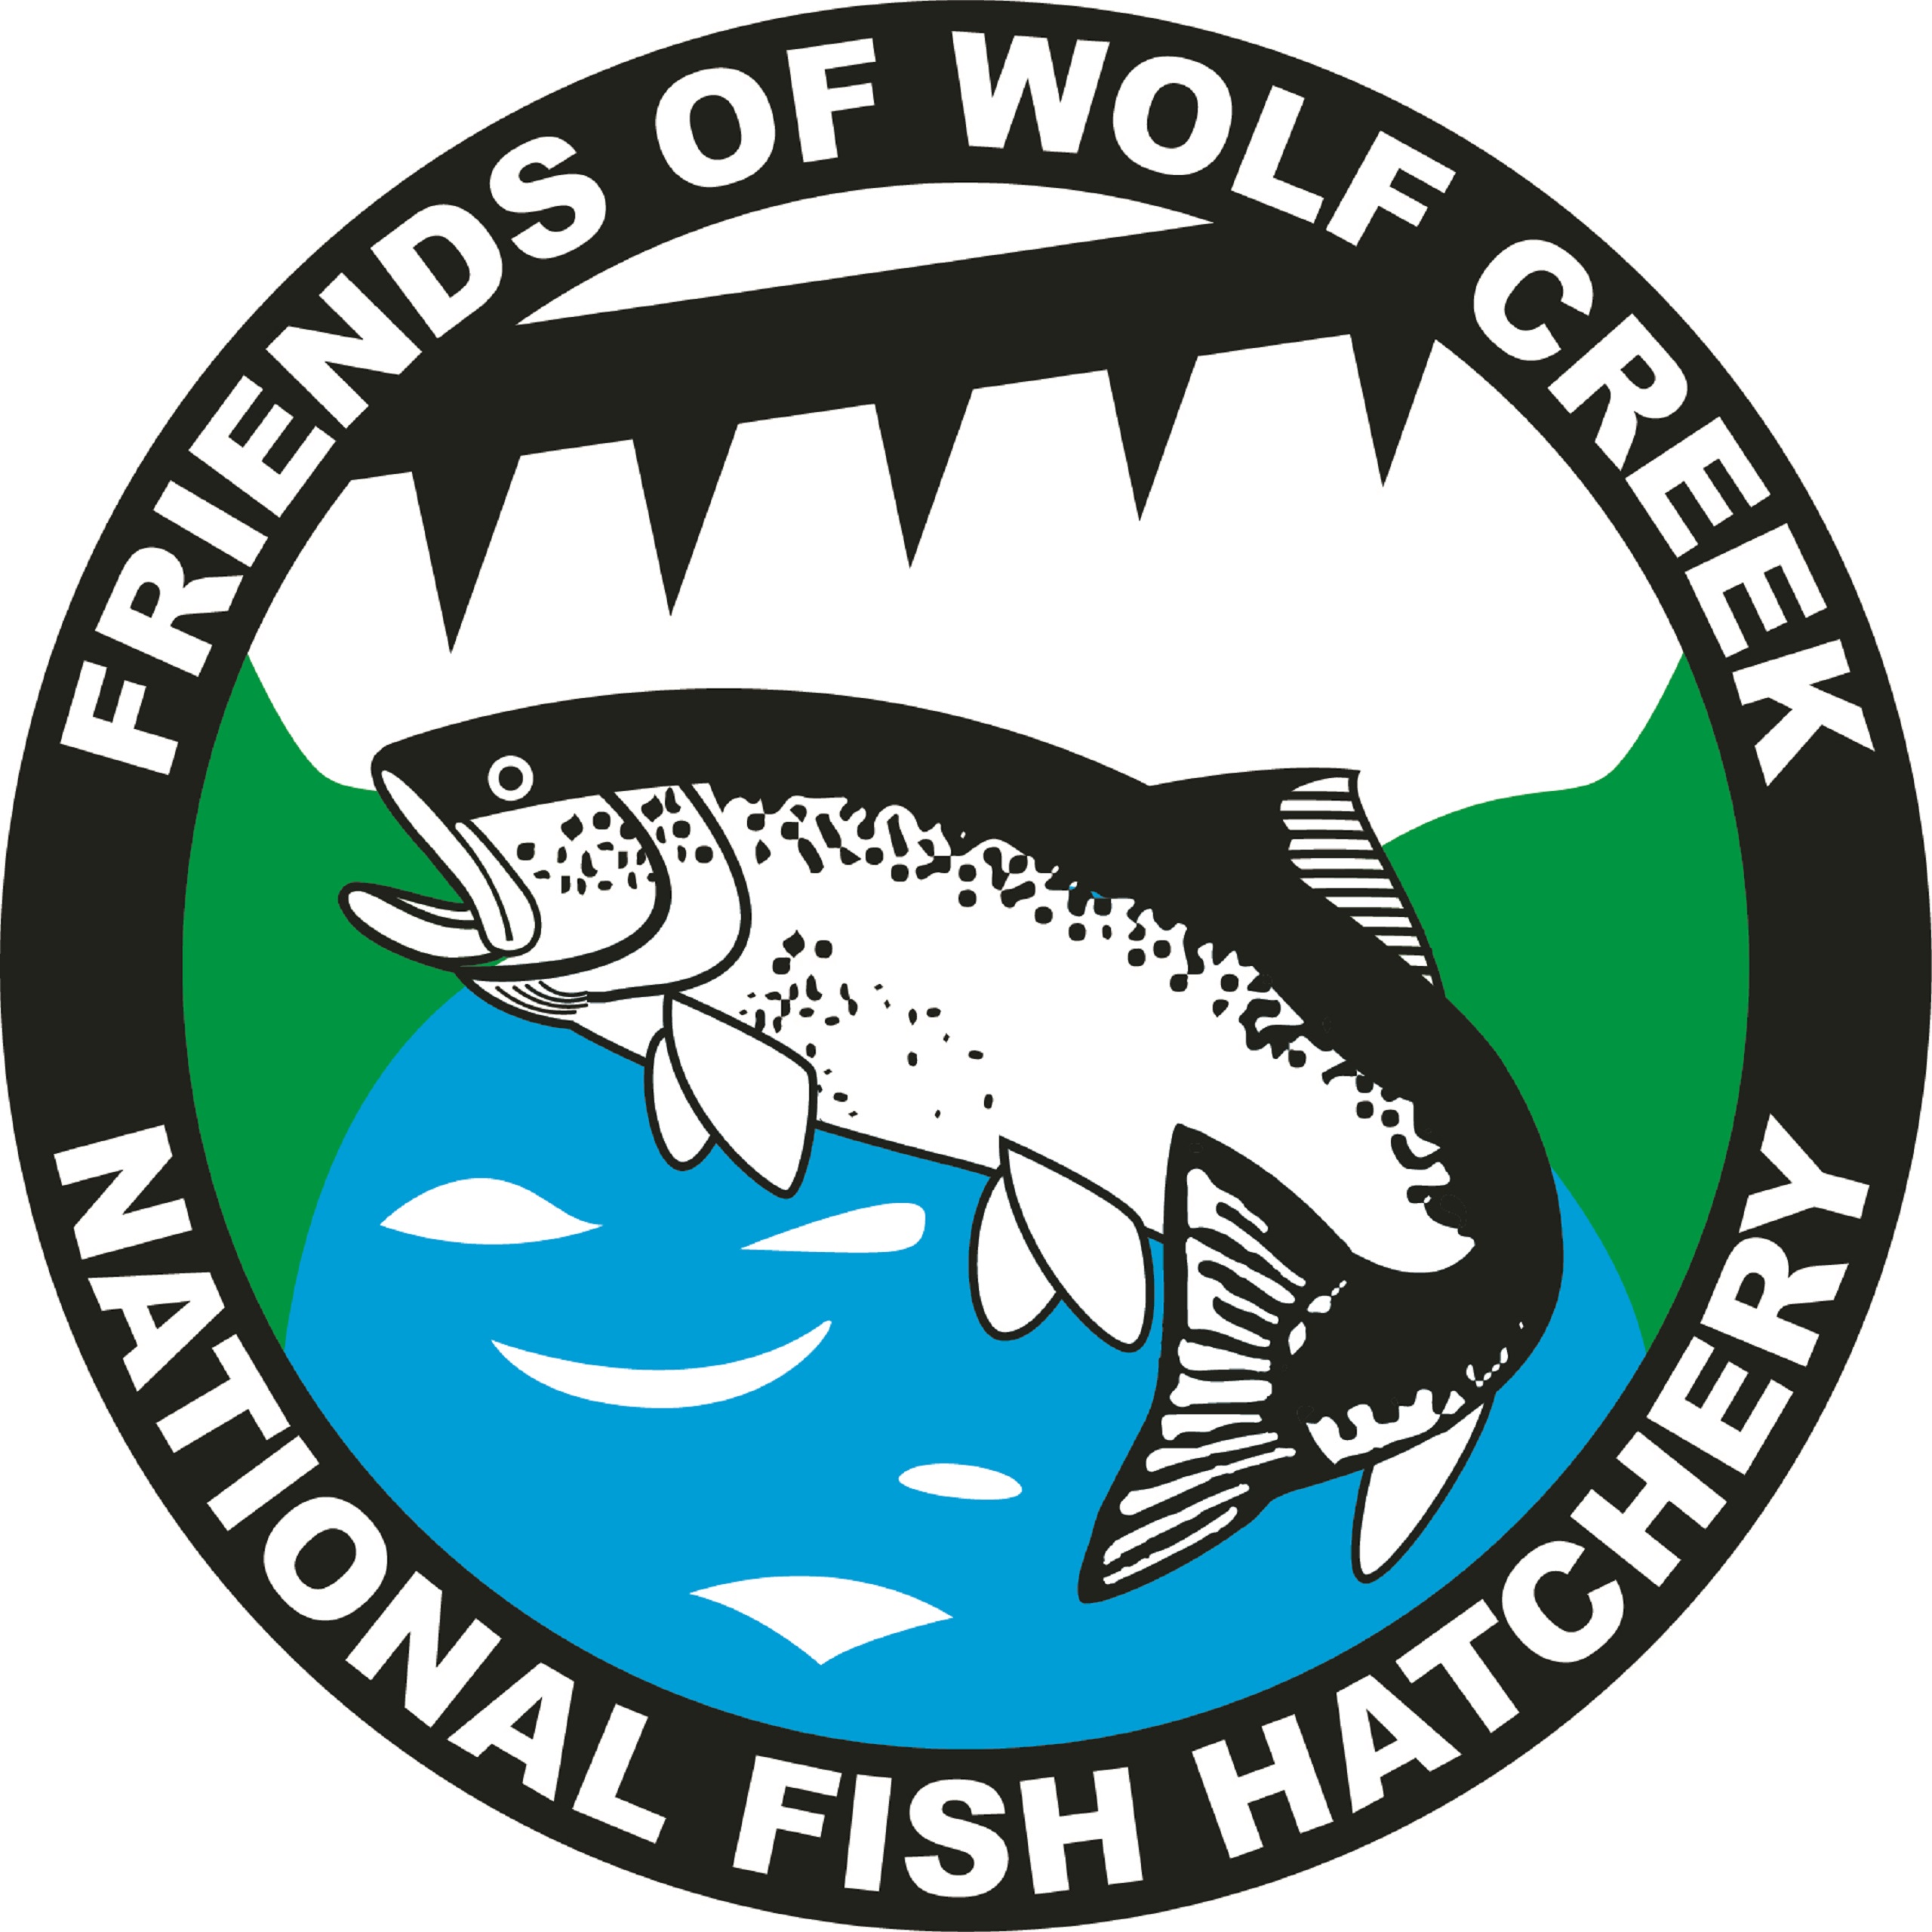 Friends of Wolf Creek National Fish Hatchery